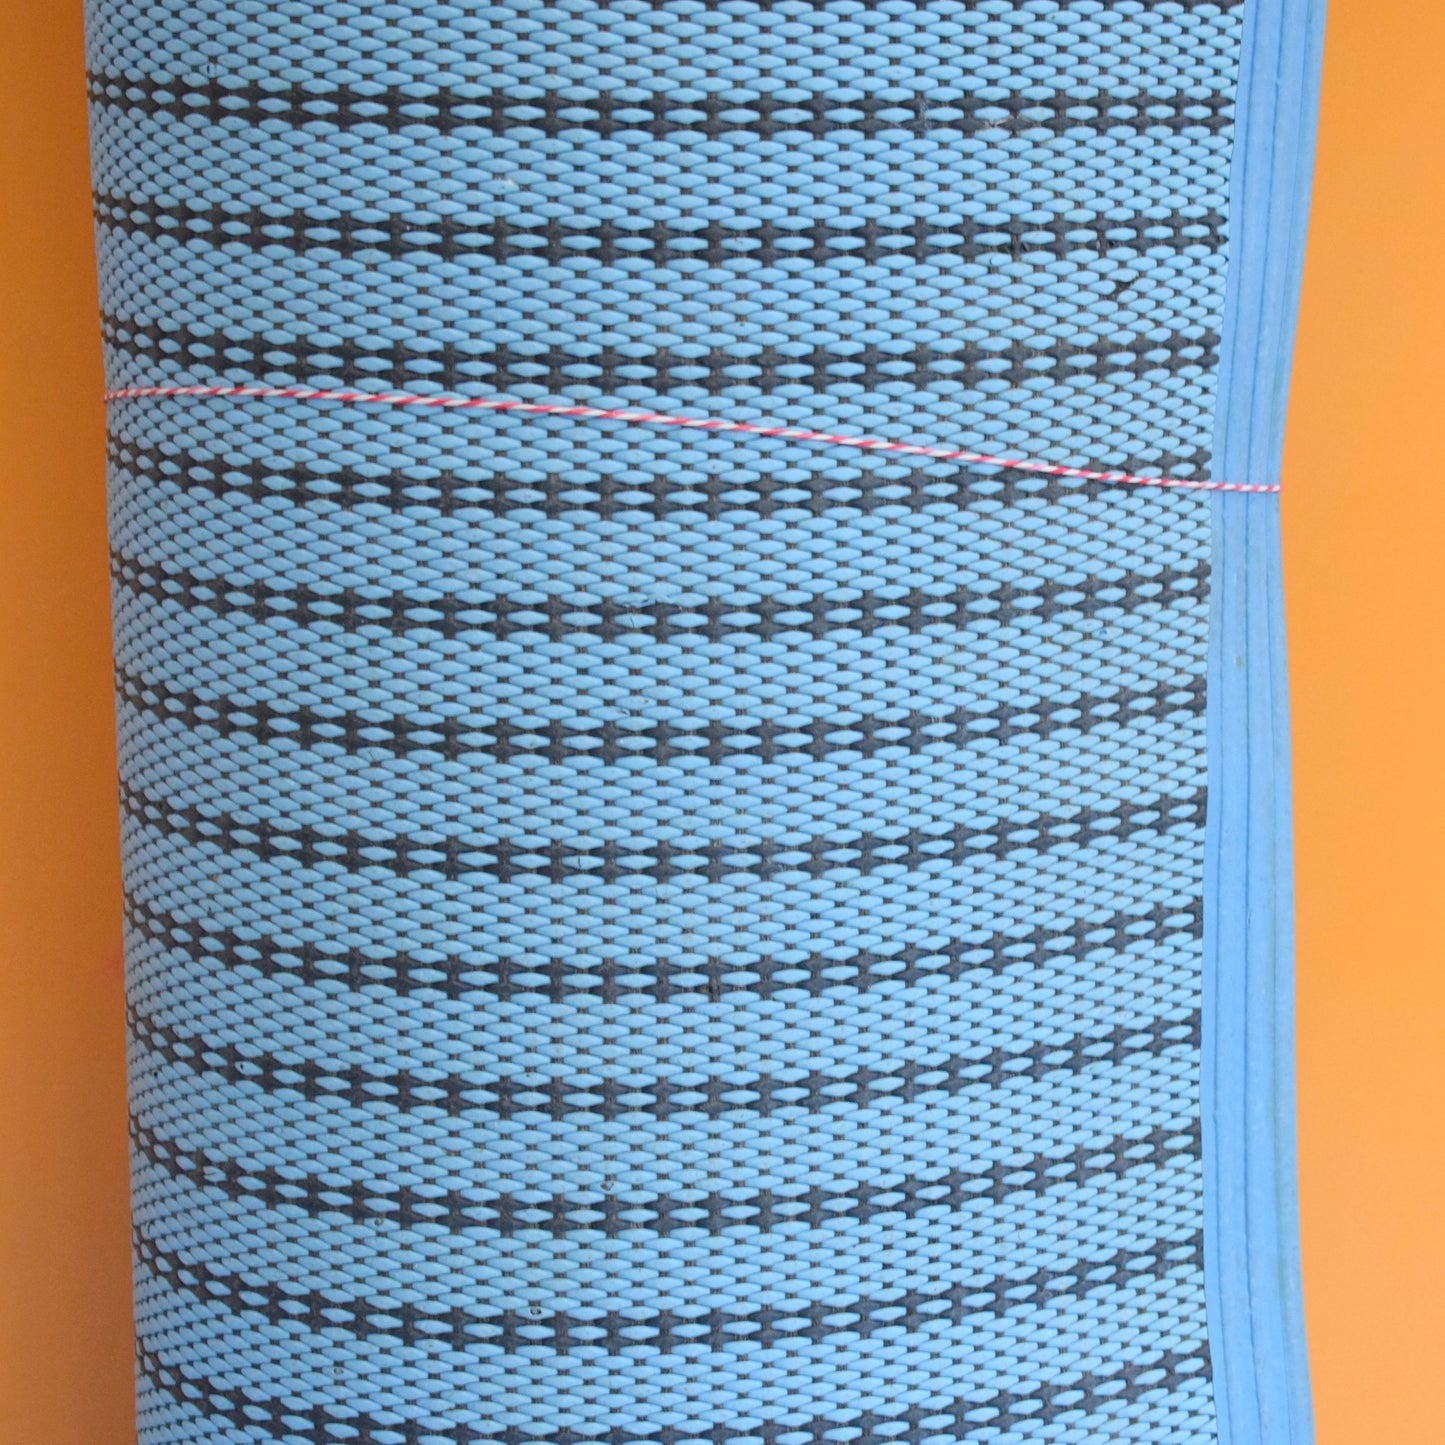 Vintage 1960s Plastic Woven Rug - Dandycord - Blue